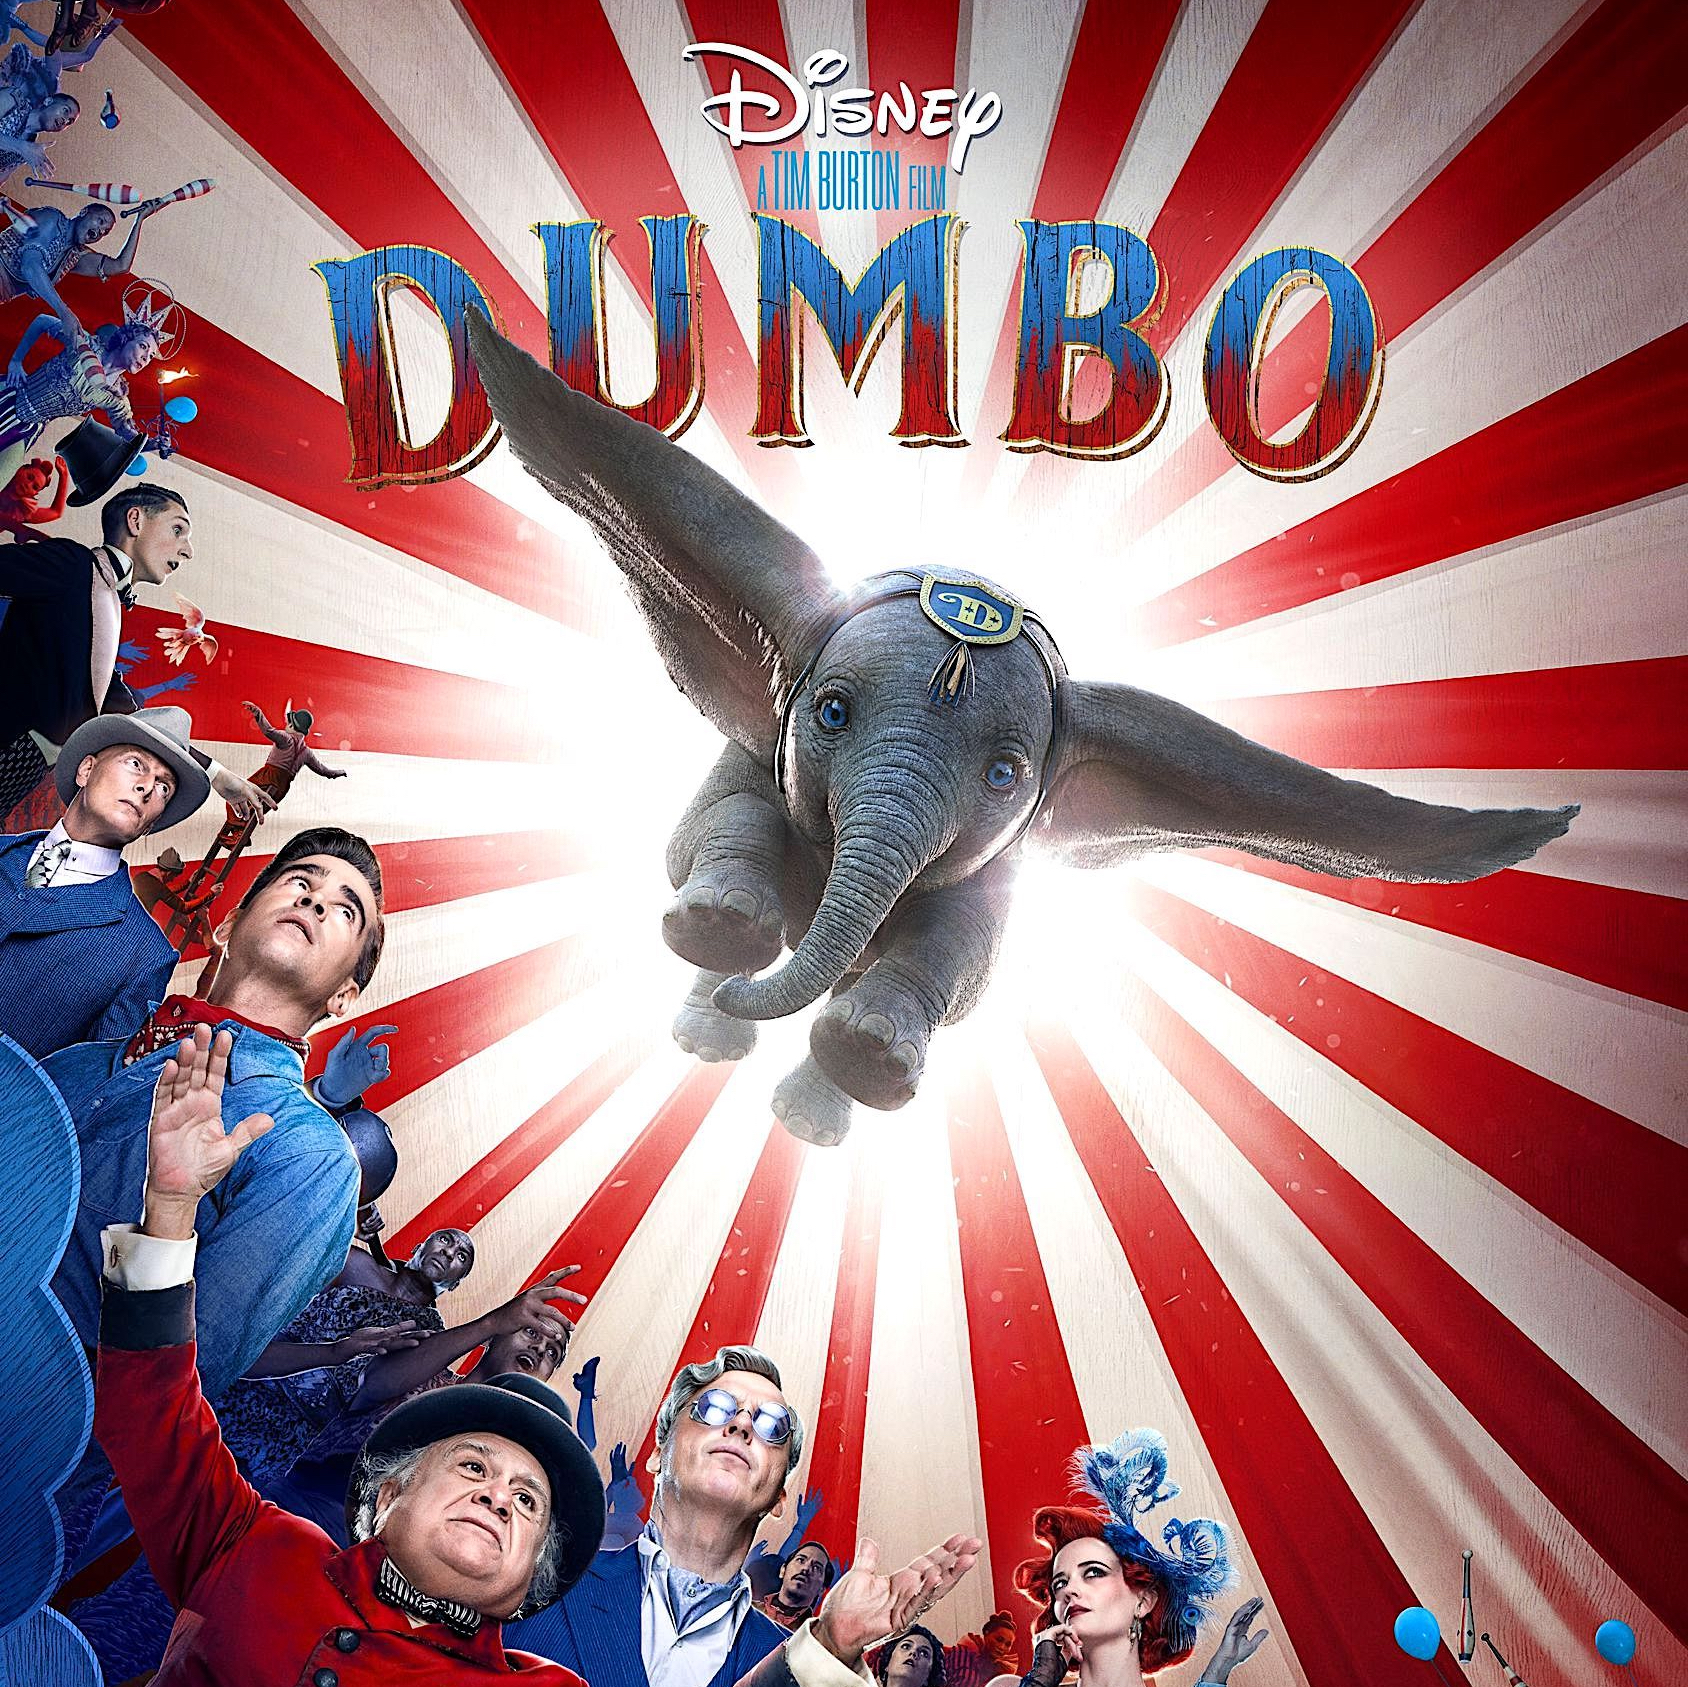 Disney's "Dumbo" with The Hit House composer Dan Diaz's song "Haku" in TV Spot.